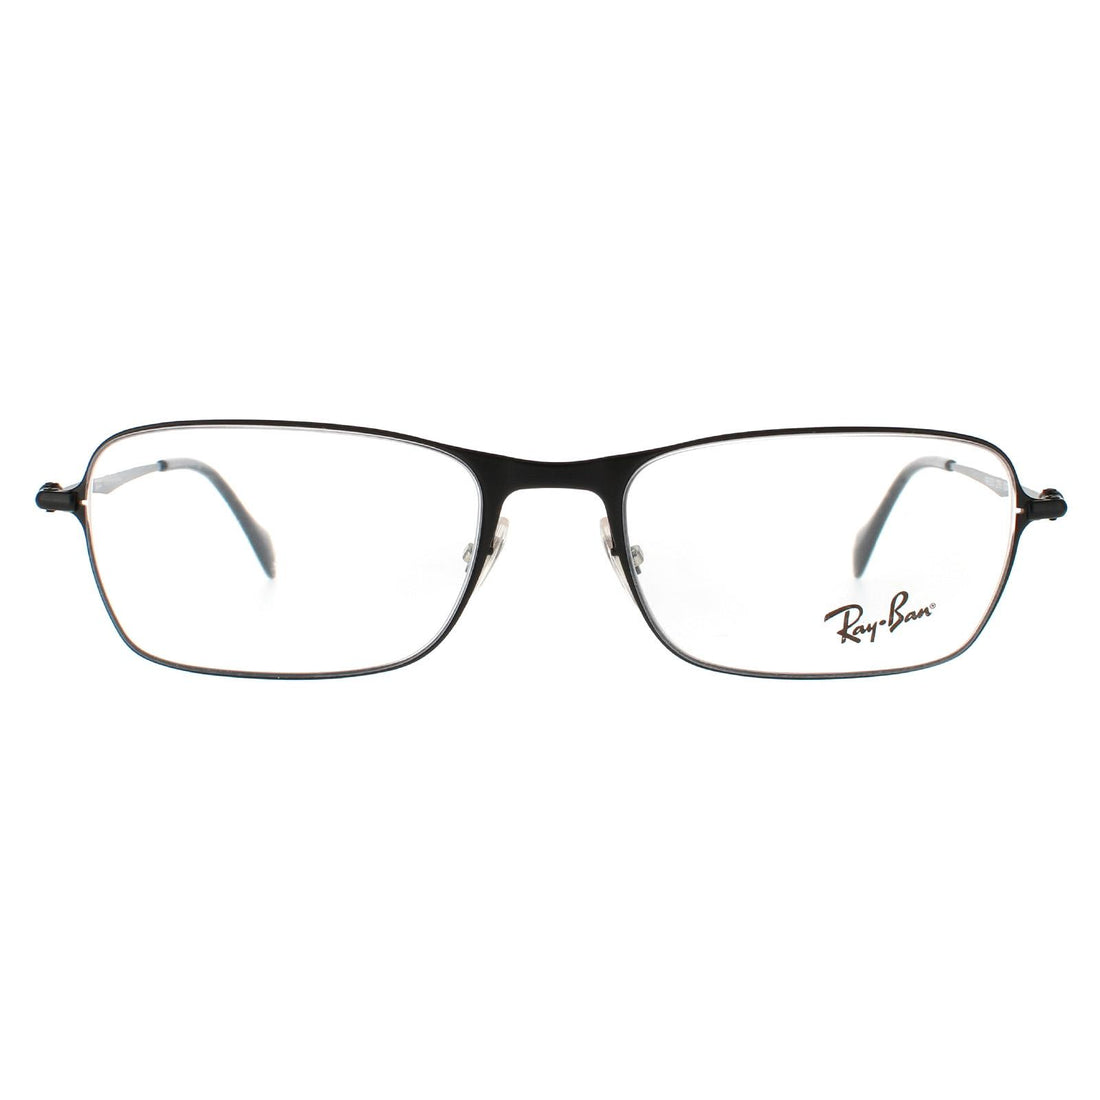 Ray-Ban 6253 Glasses Frames Black 52